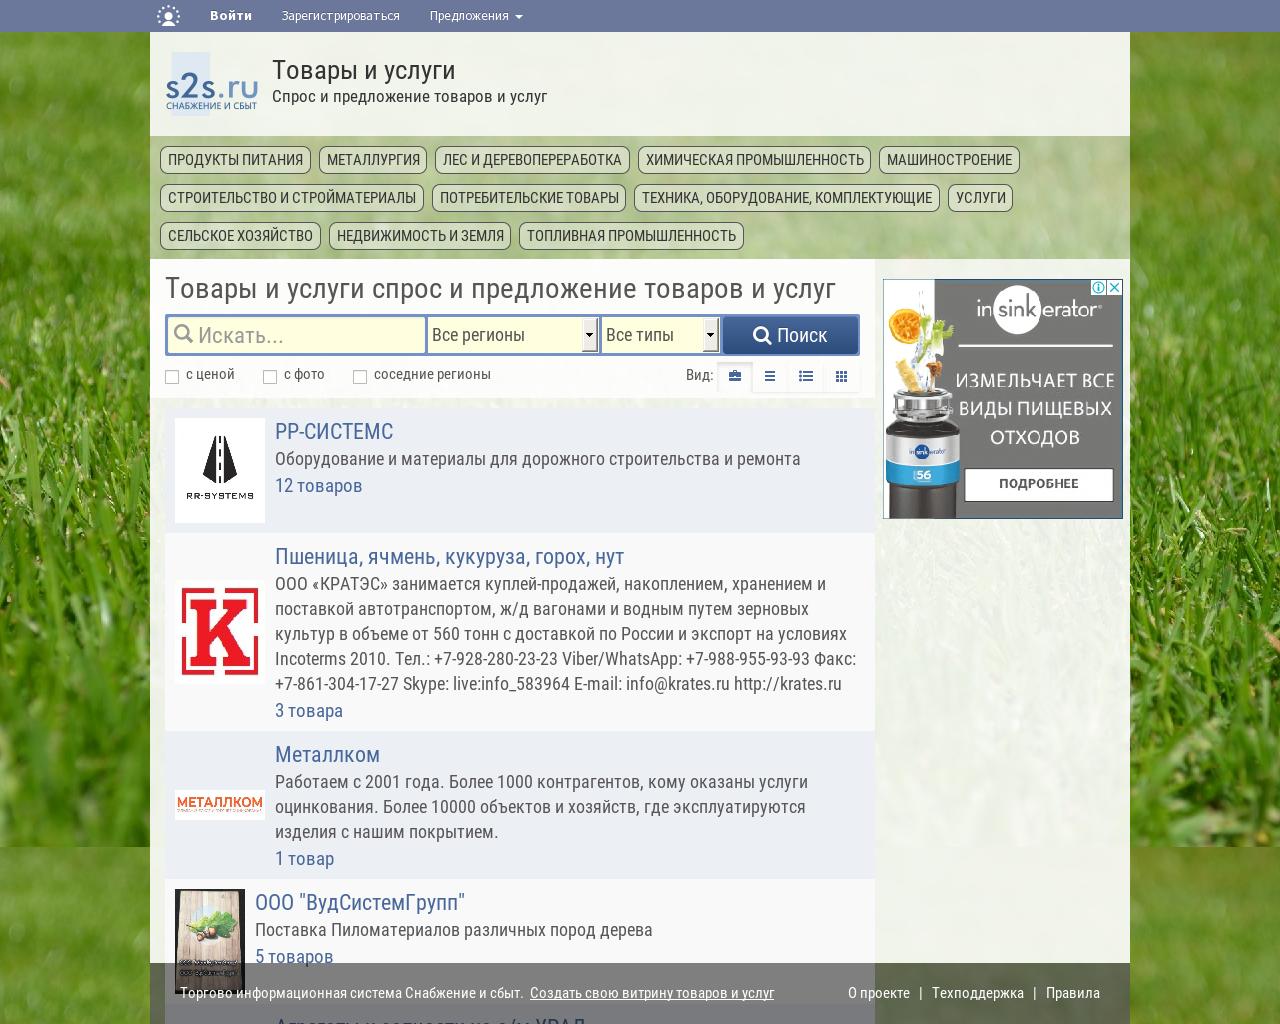 Изображение сайта companysale.ru в разрешении 1280x1024